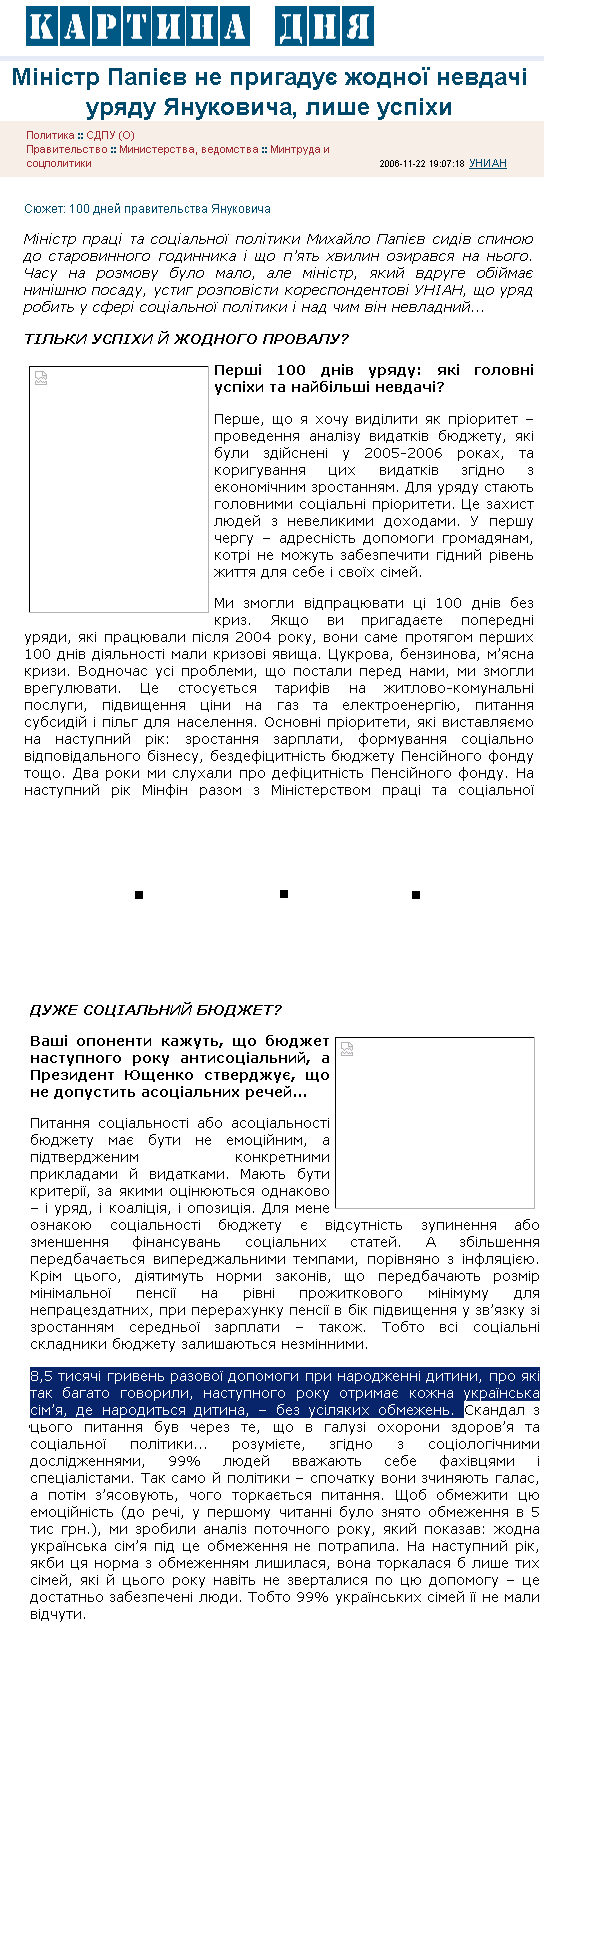 http://www.kartina-ua.info/print_form.phtml?art_id=43702&print_action=article